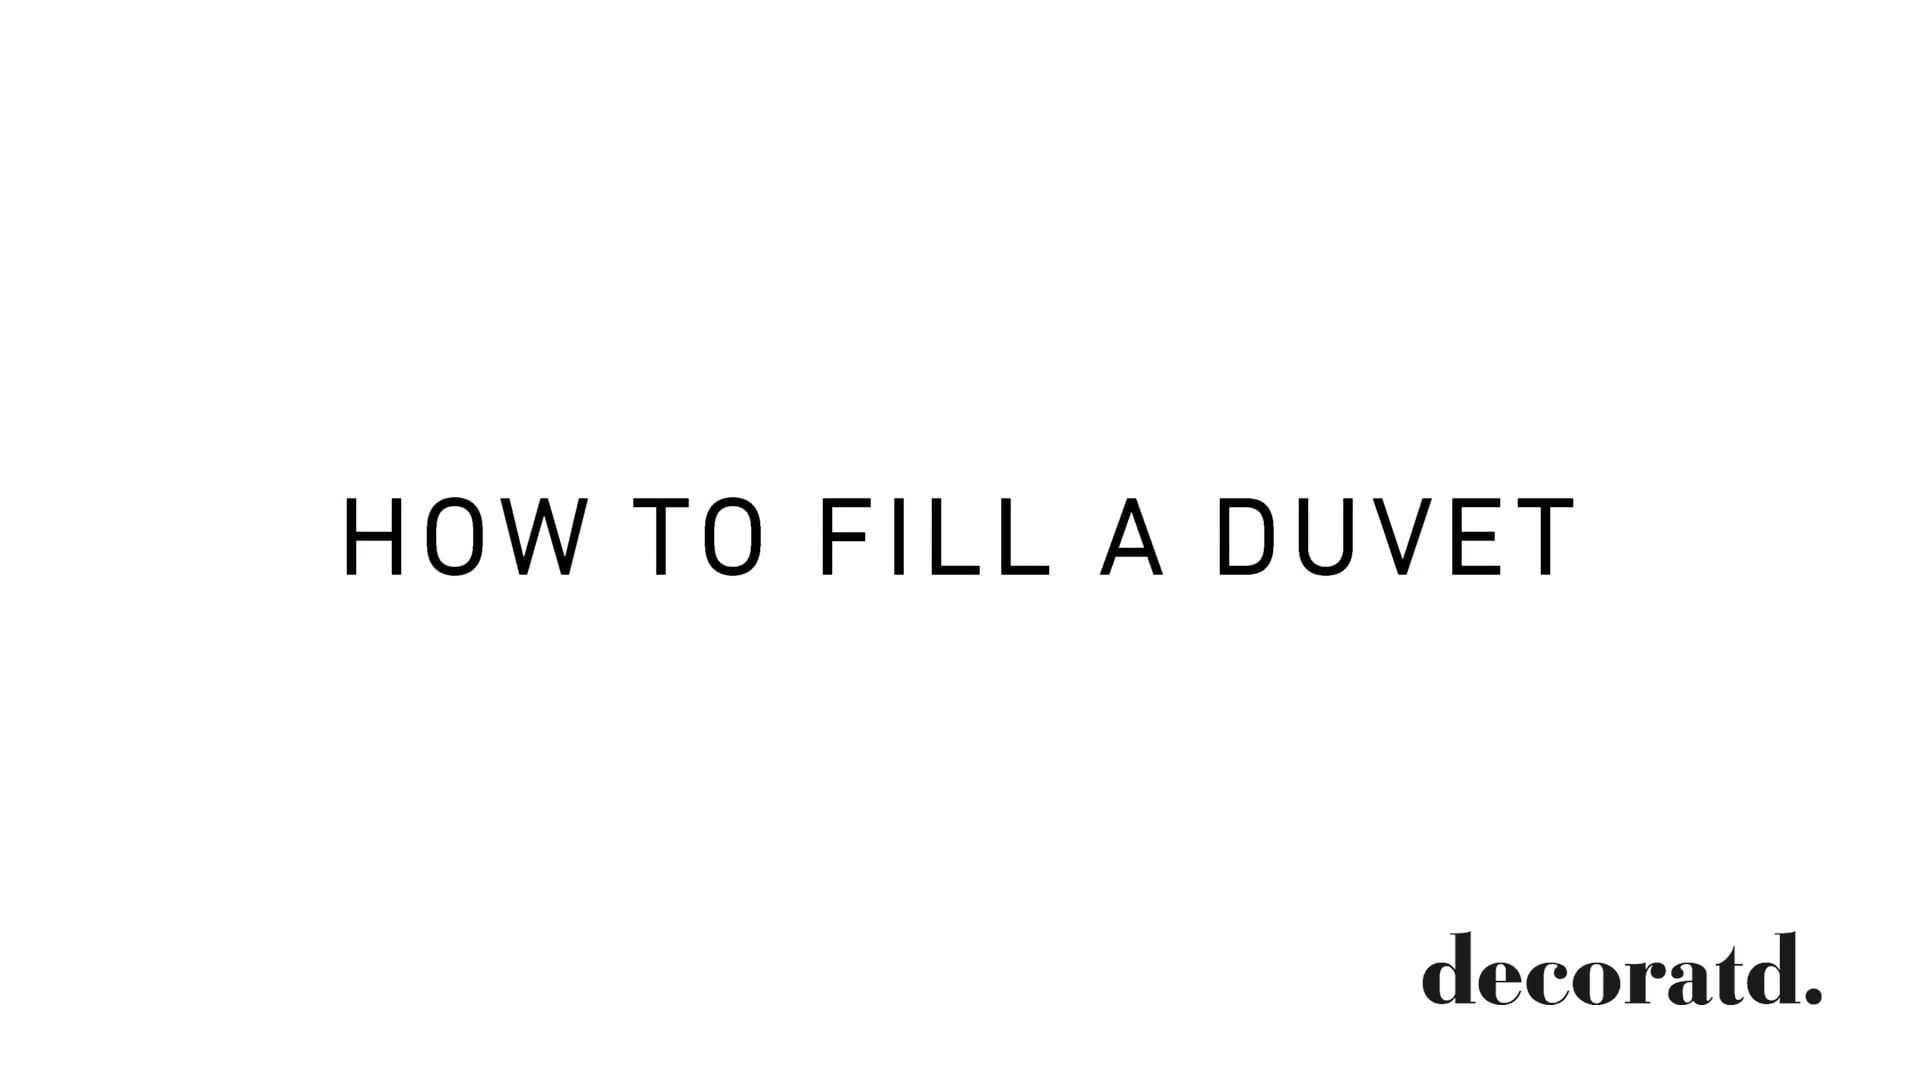 Decoratd. - How To Fill A Duvet